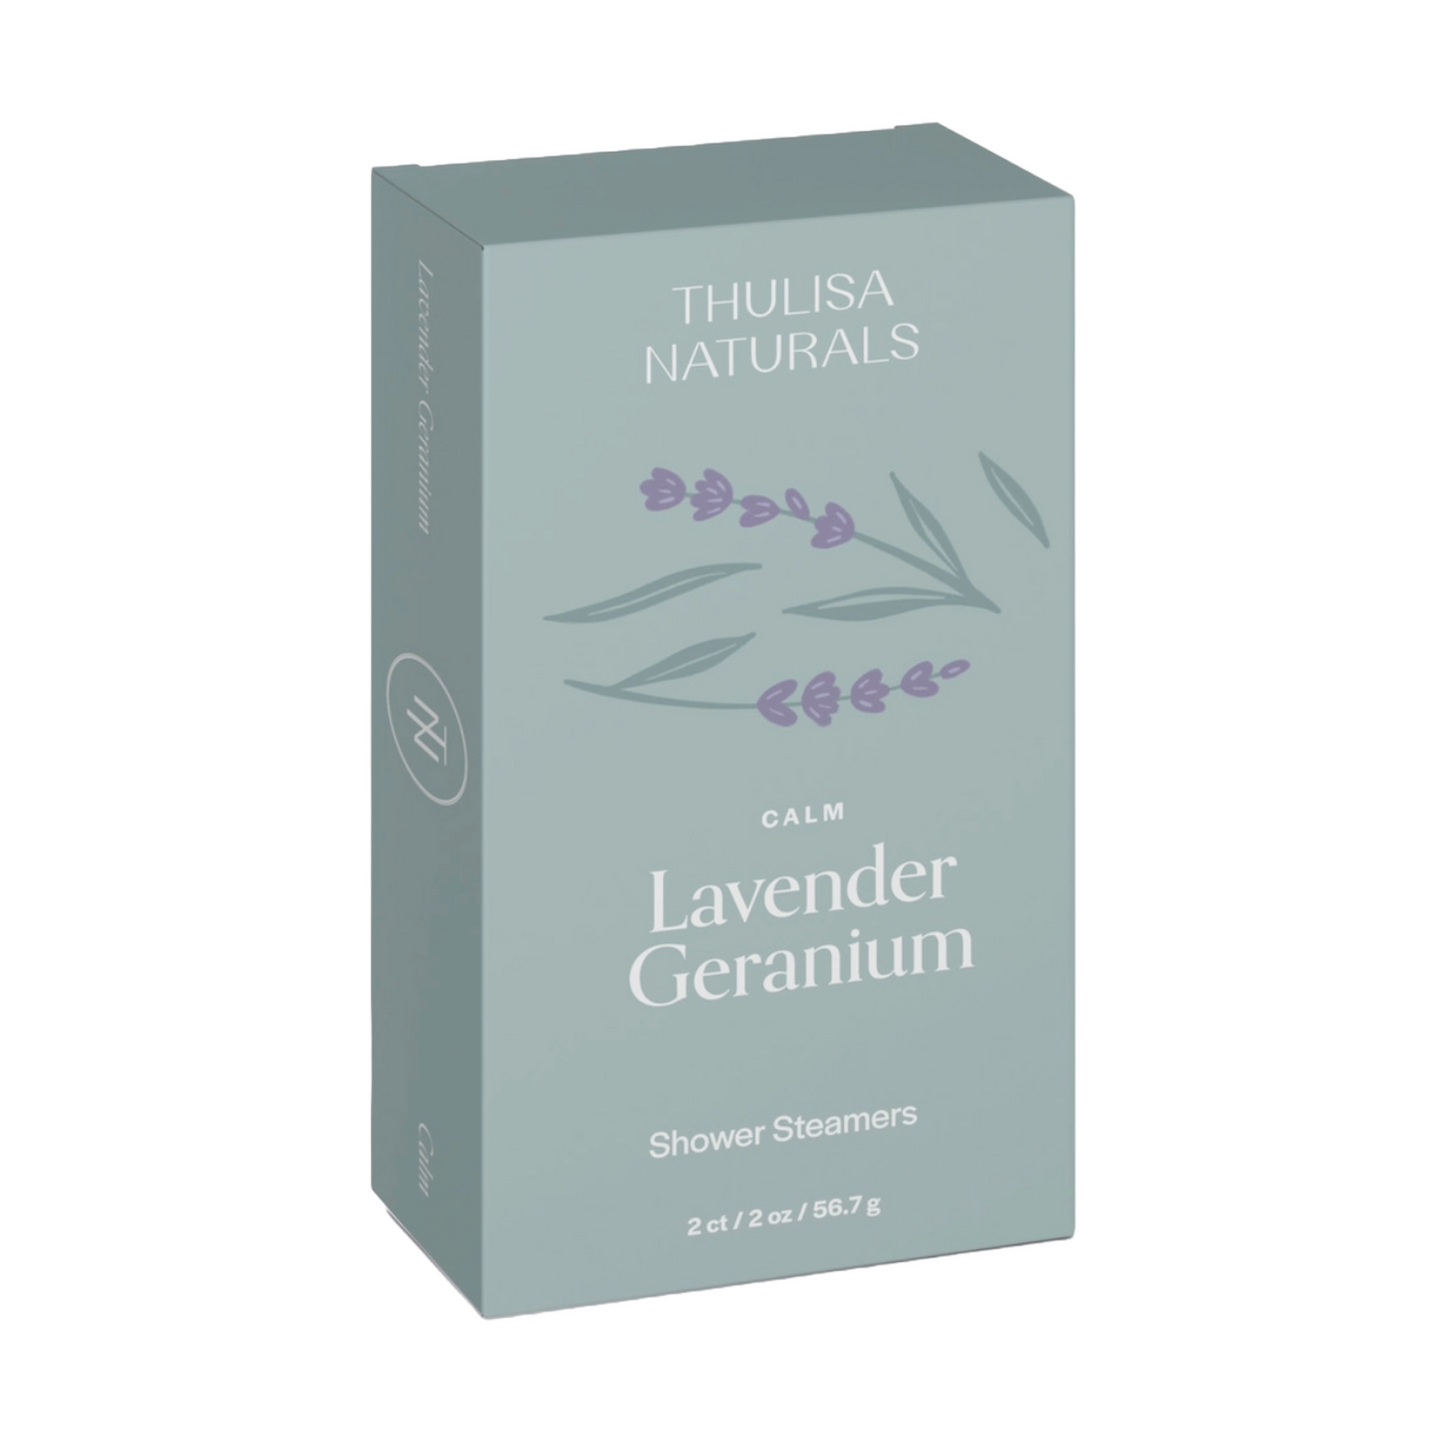 Lavender Geranium Shower Steamers by Thulisa Naturals